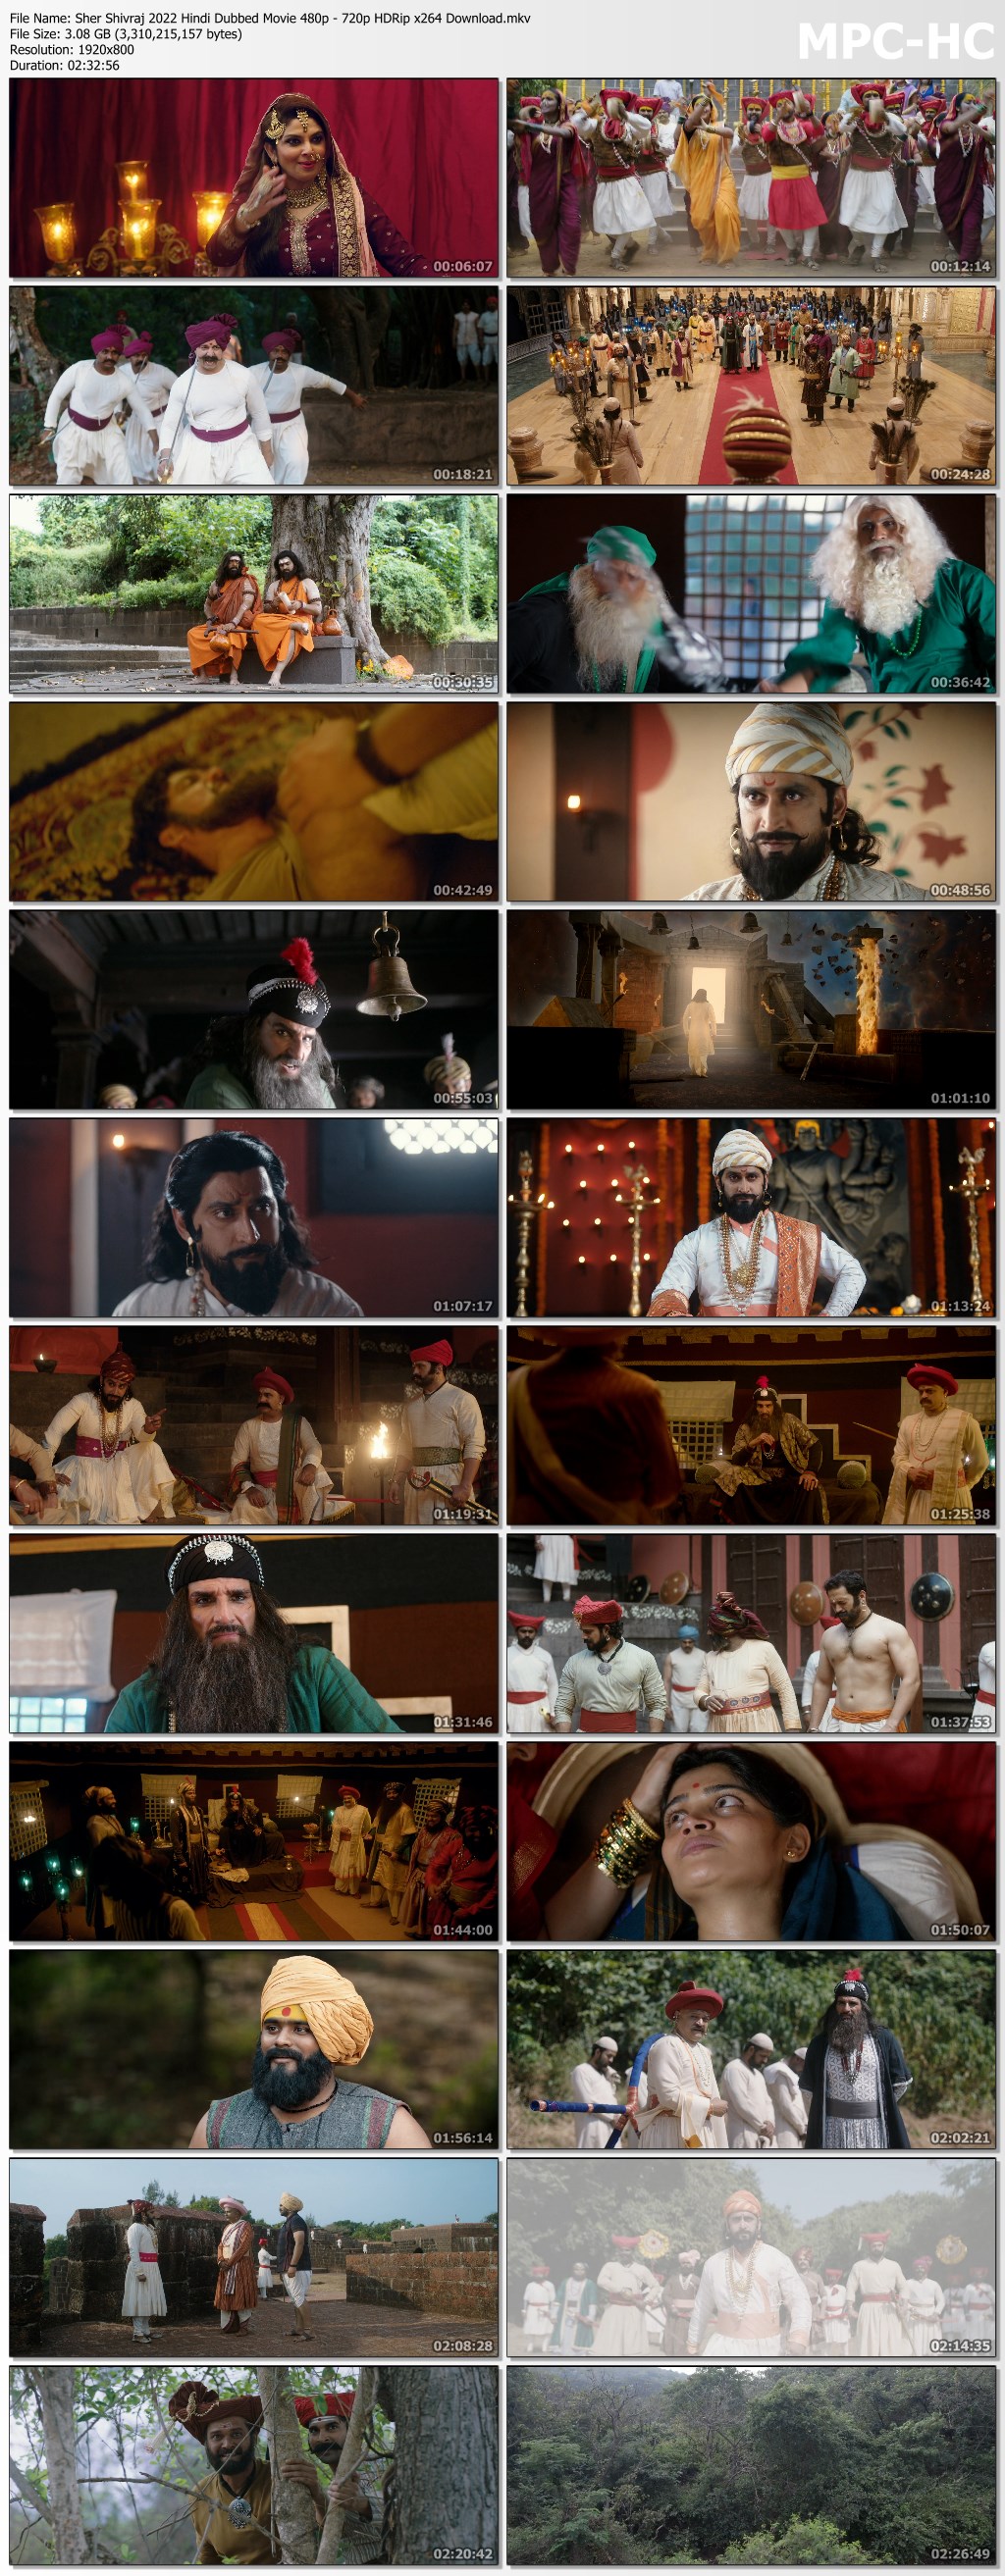 Sher Shivraj 2022 Hindi Dubbed Movie 480p 720p HDRip x264 Download.mkv thum1bs